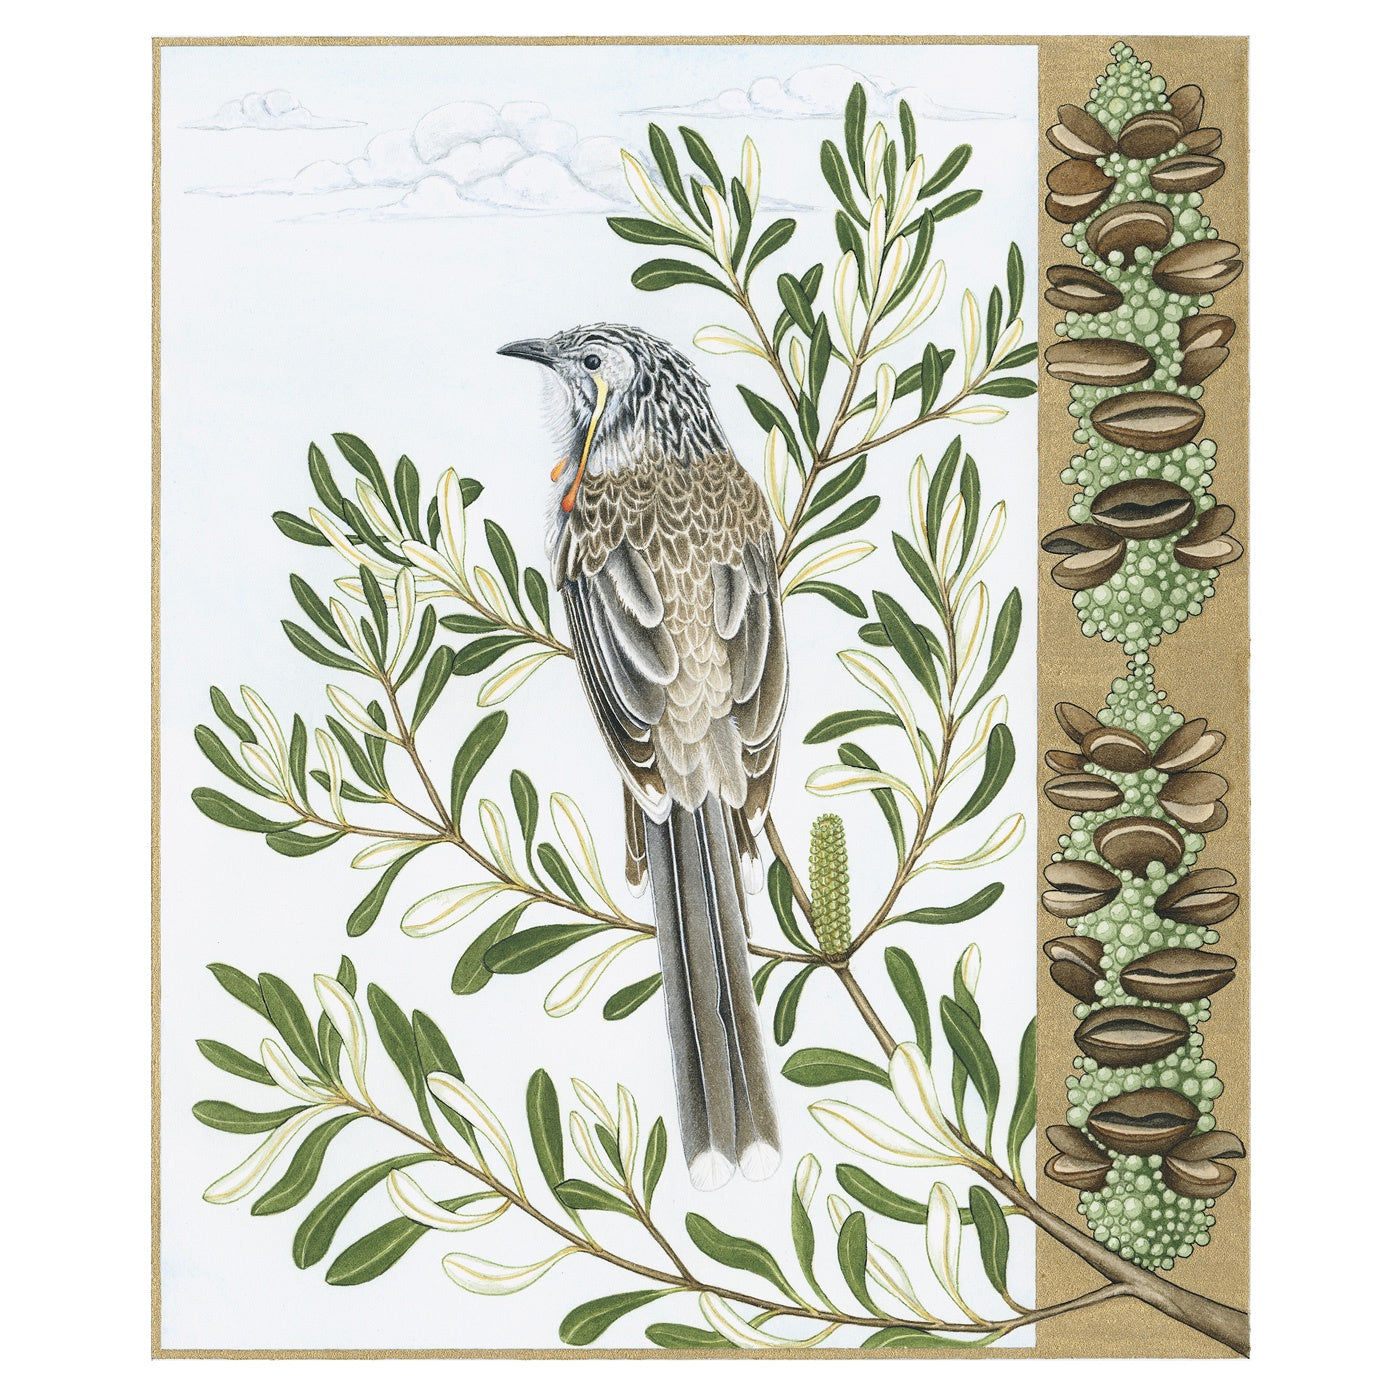 Sylvie Gerozisis - Birds of Tasmania - Art Print - Yellow Wattlebird